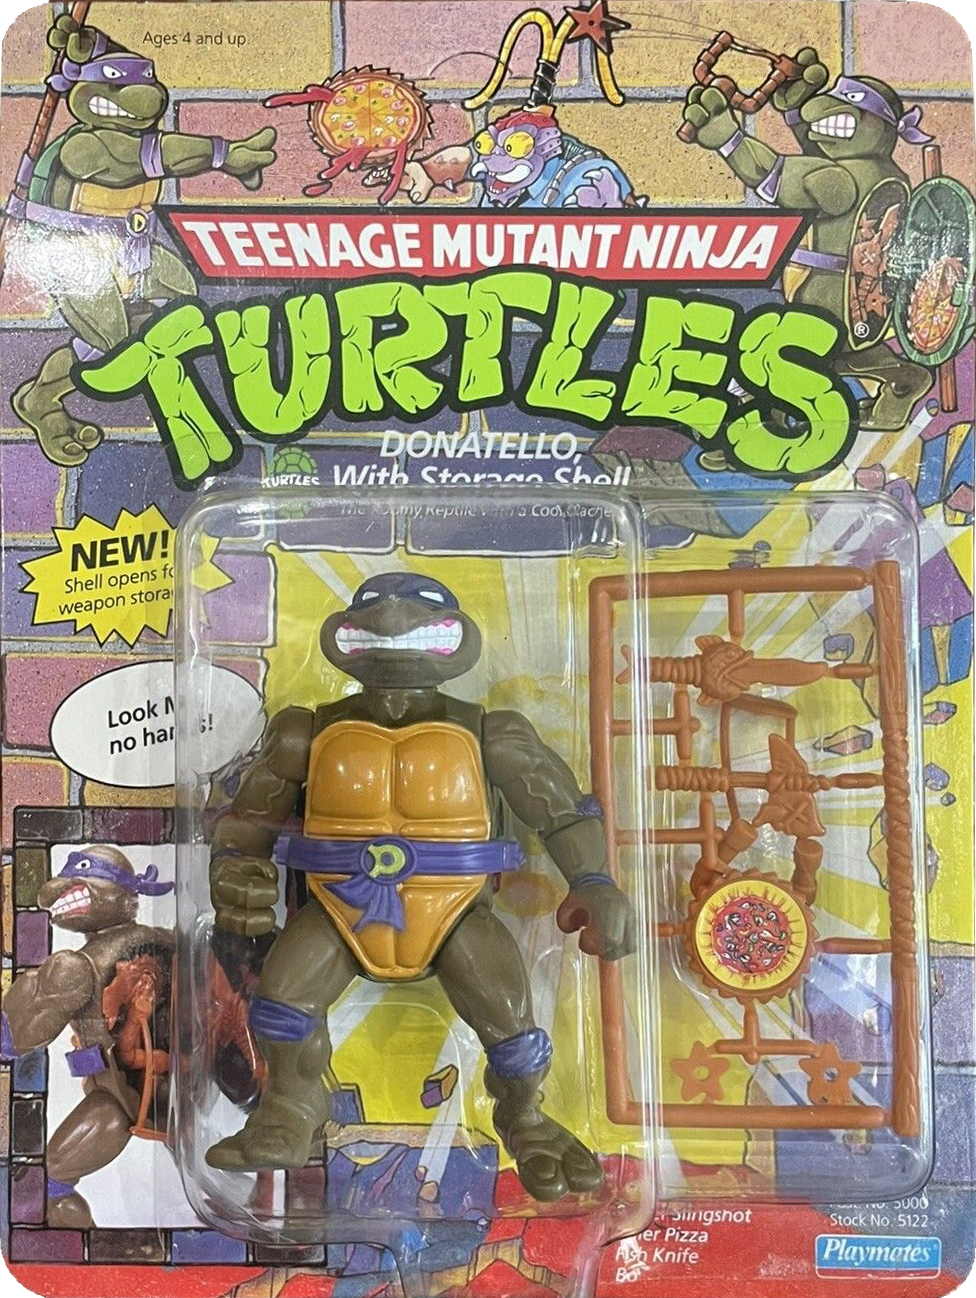 https://www.actionfigure411.com/teenage-mutant-ninja-turtles/images/donatello-with-storage-shell-4868.jpg